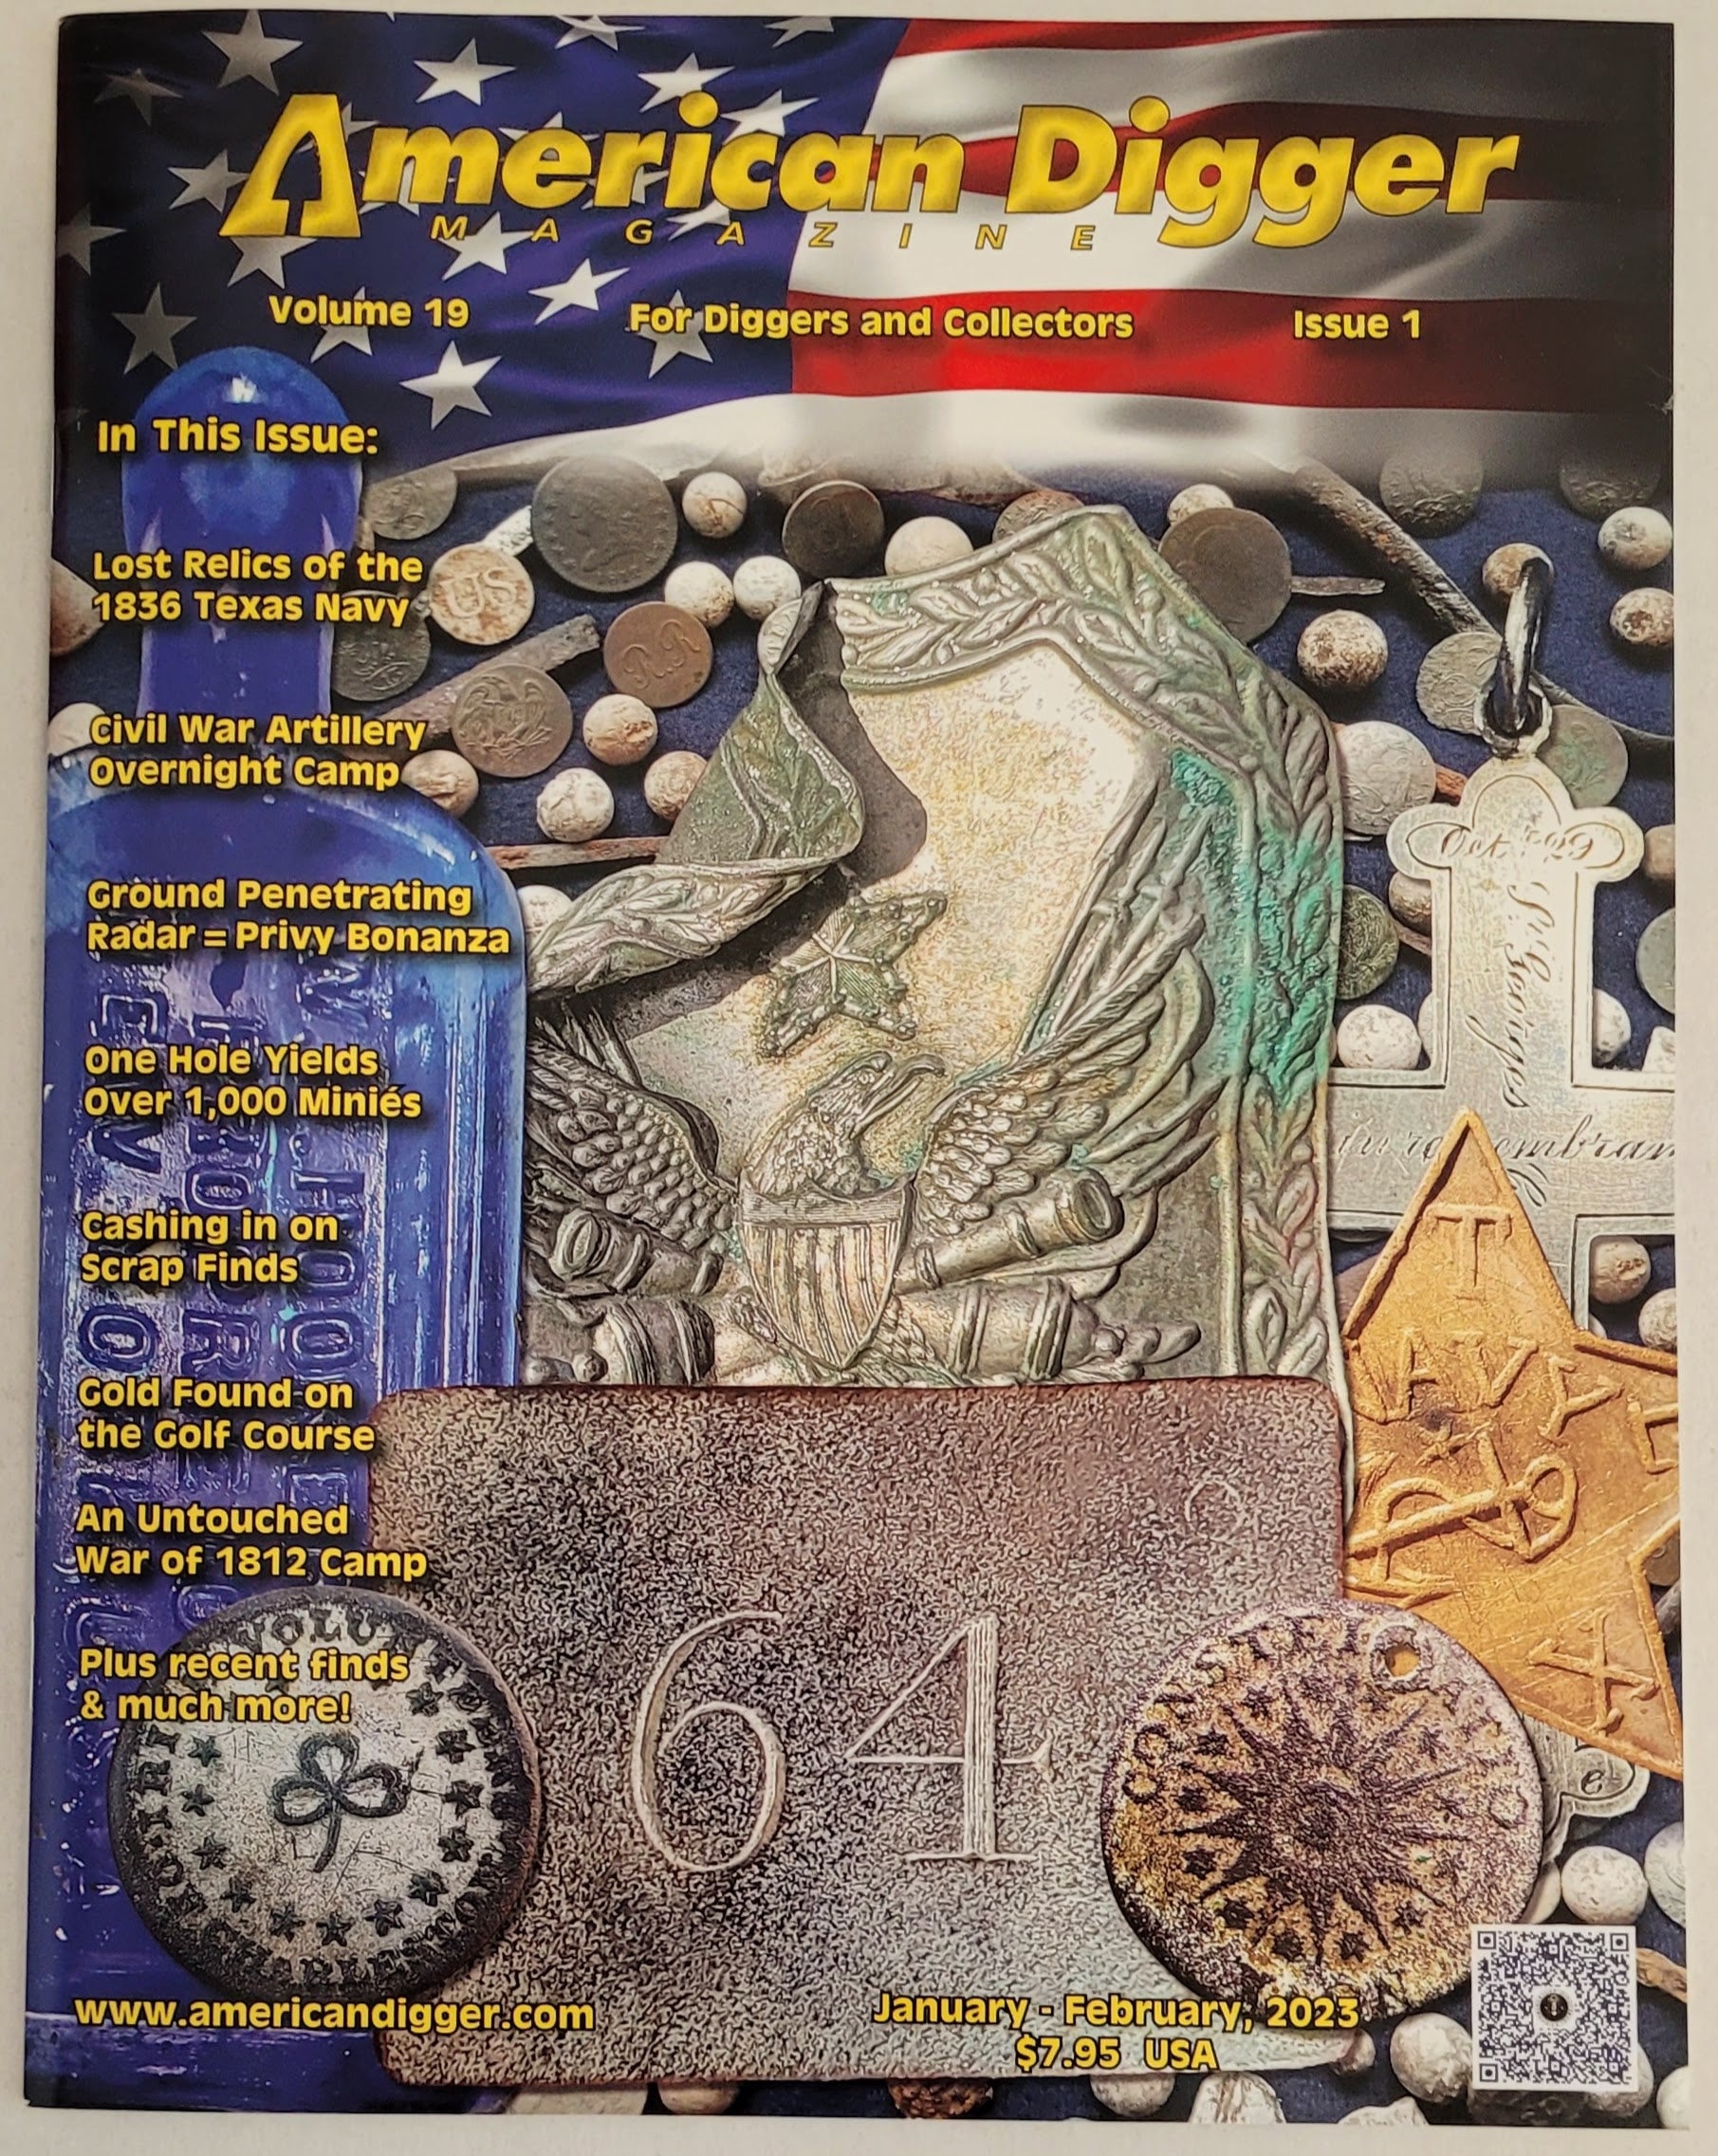 American Digger Magazine, Sept – Oct 2022 (Volume 18, Issue 5)